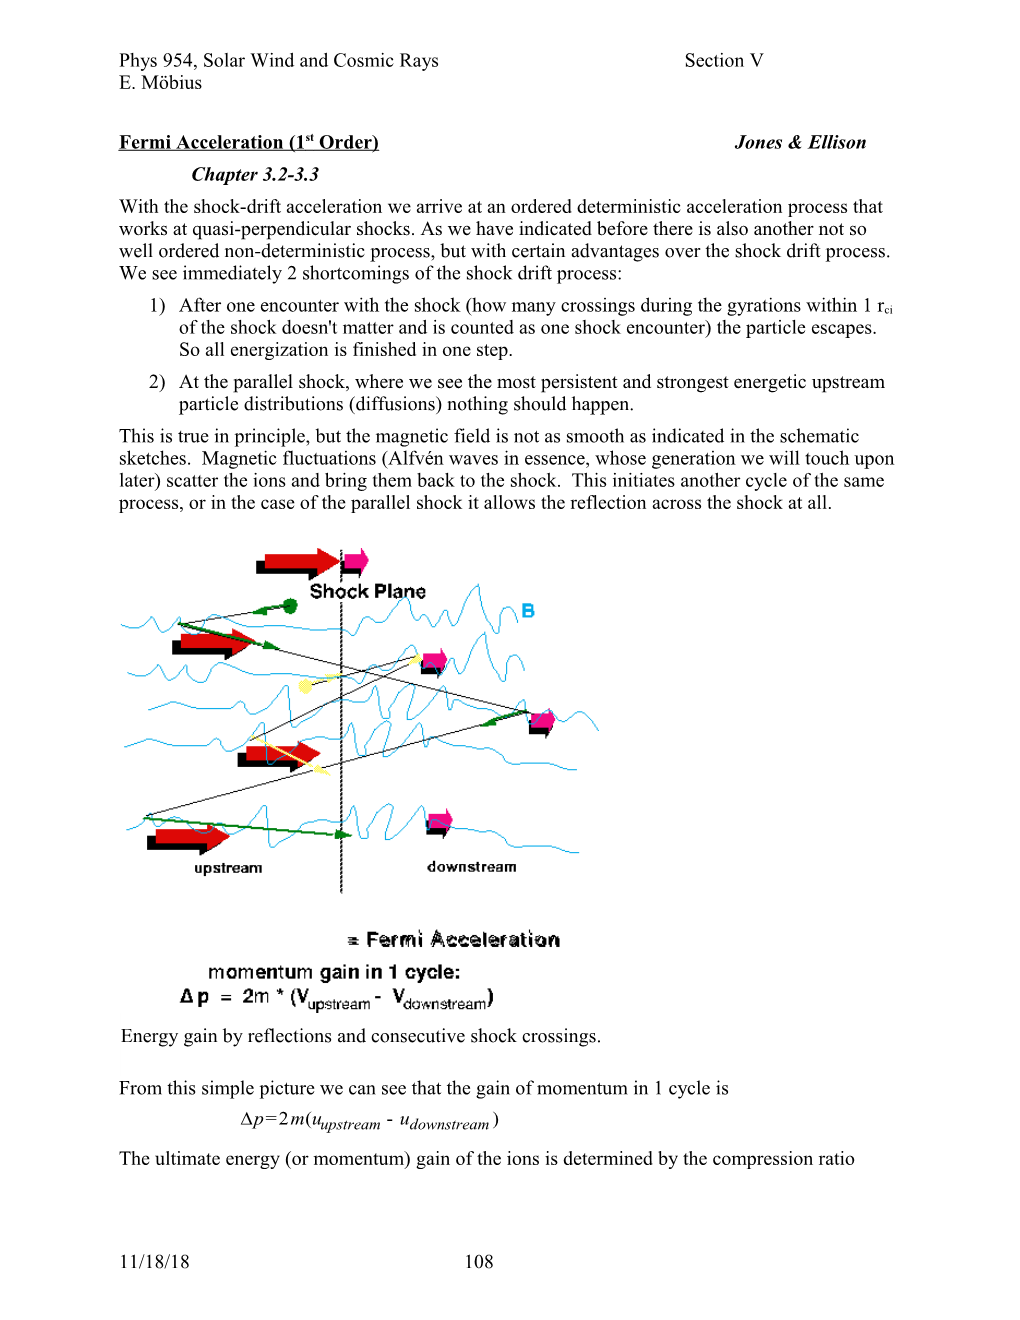 Fermi Acceleration (1St Order)Jones & Ellison